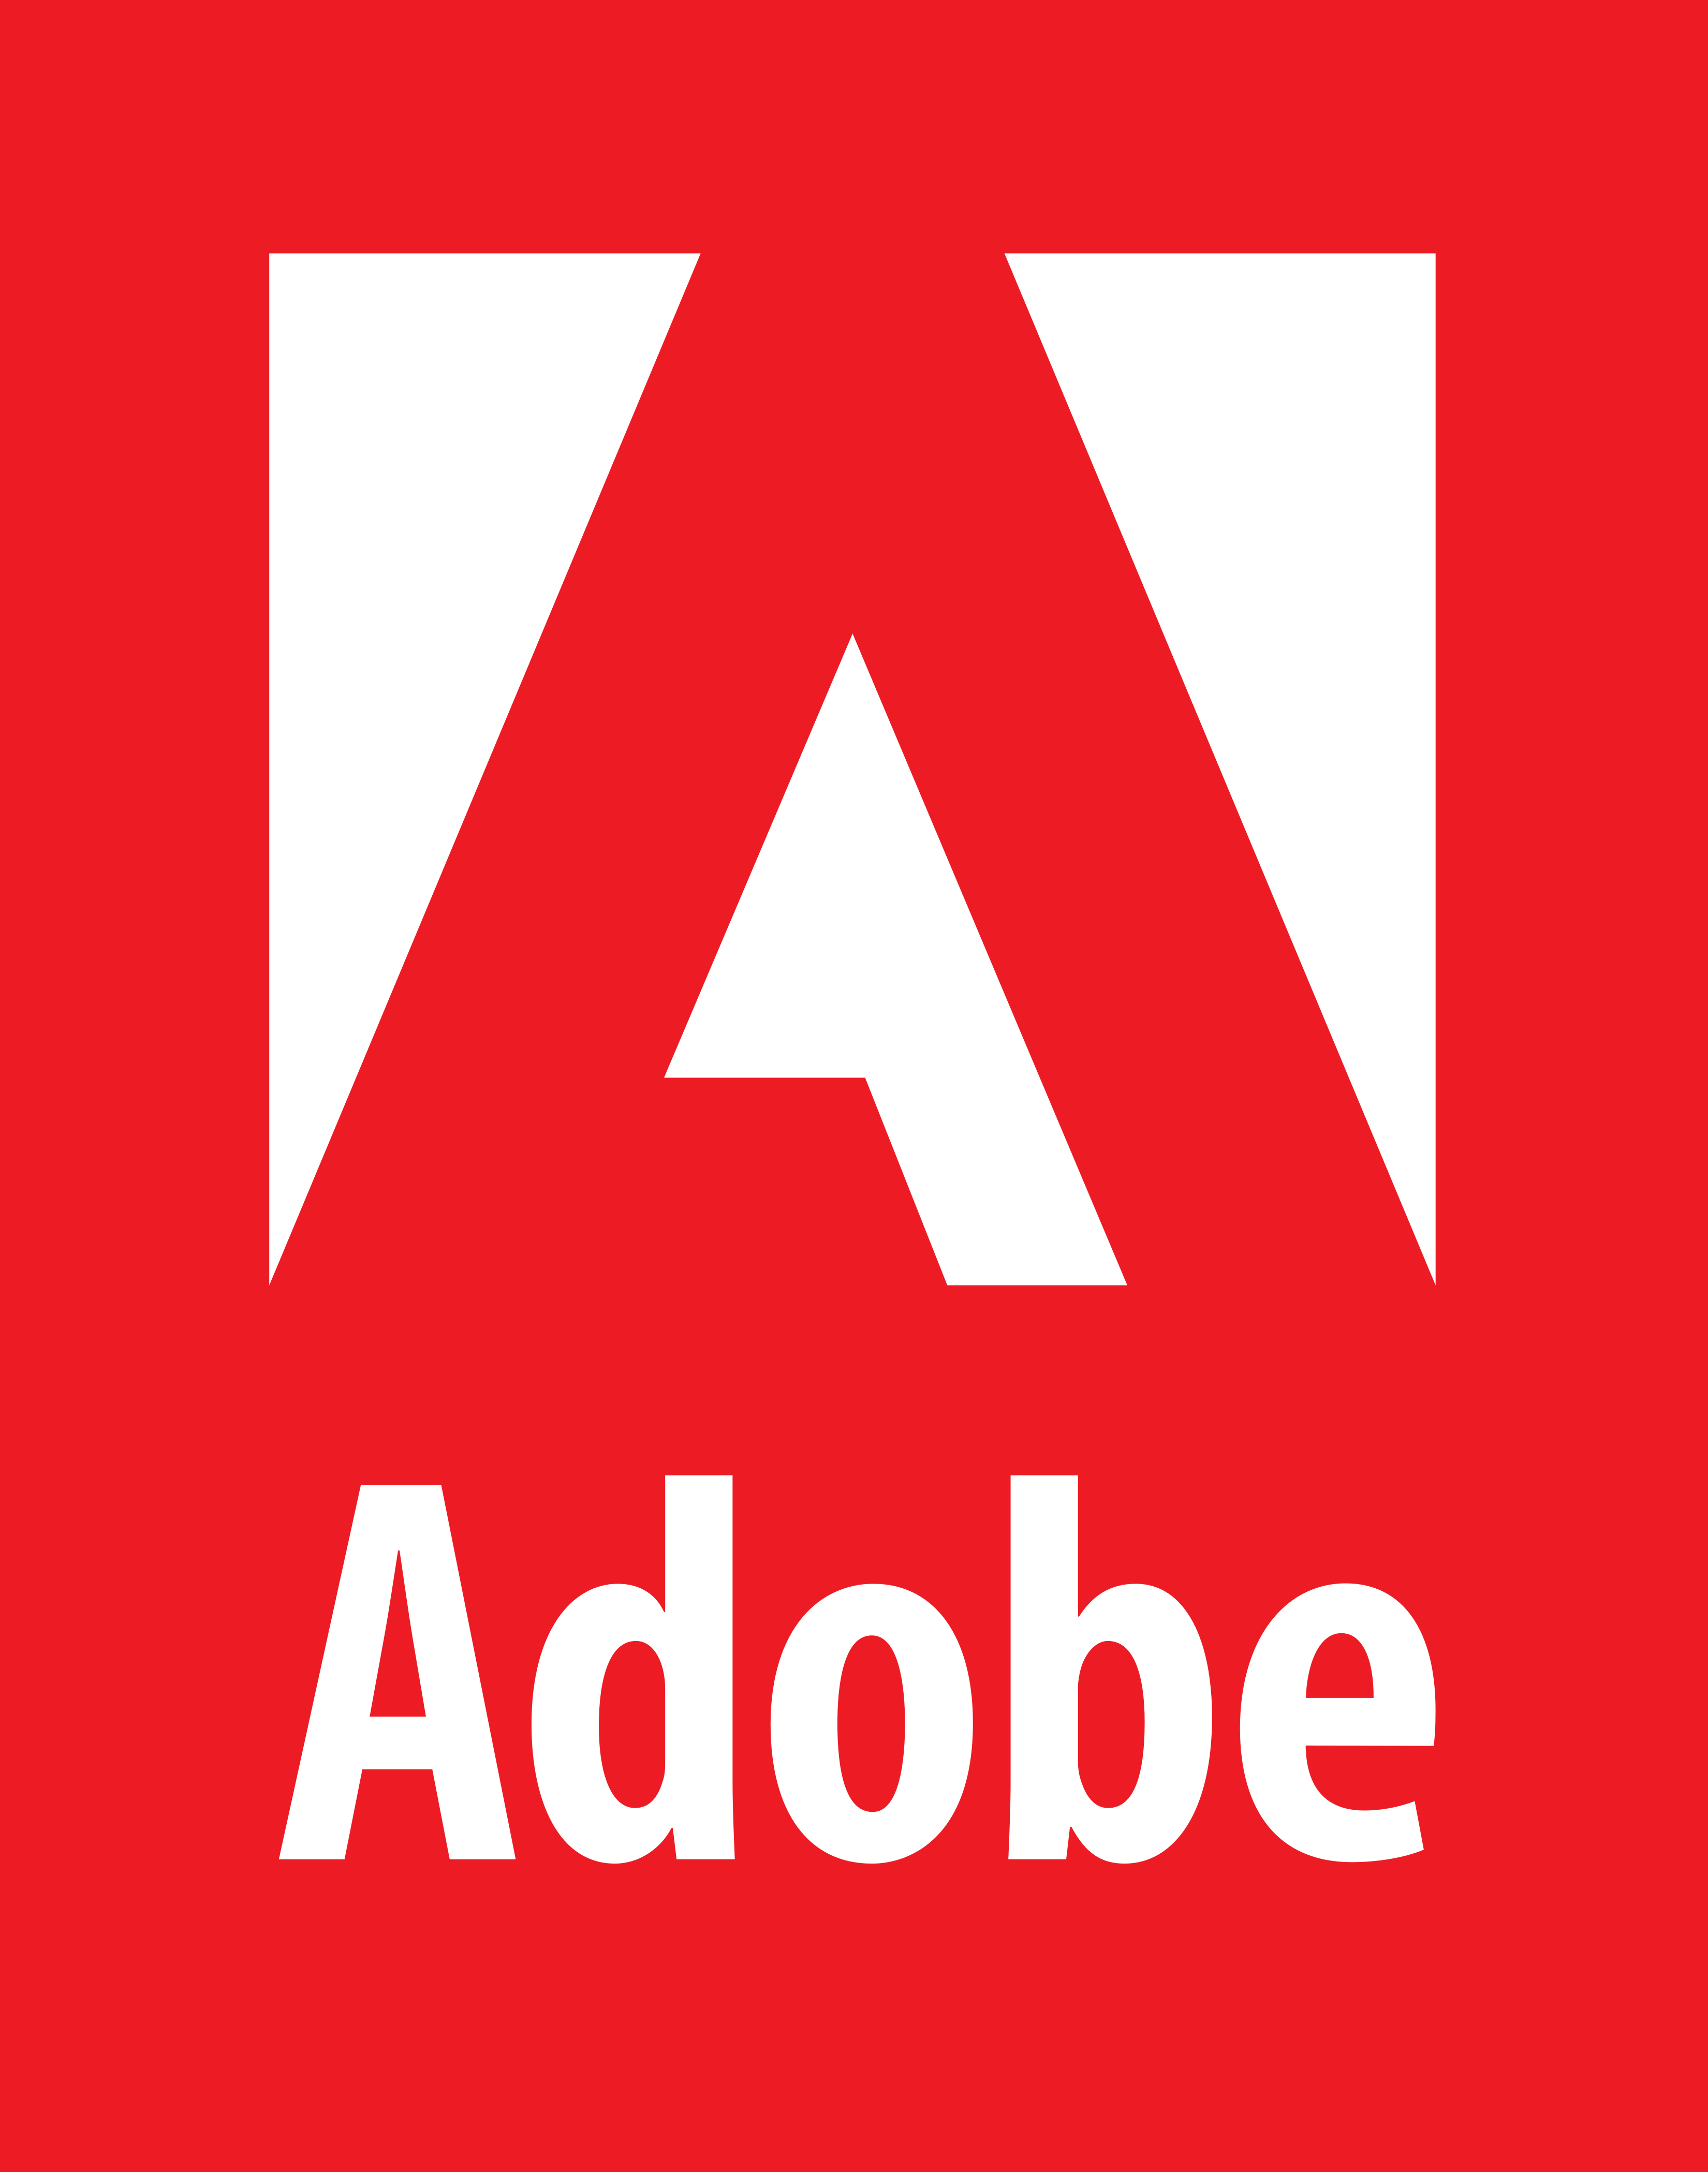 Aodbe Logo - Logo Adobe | Design (misc.) | Pinterest | Logos, Adobe e Brochure layout